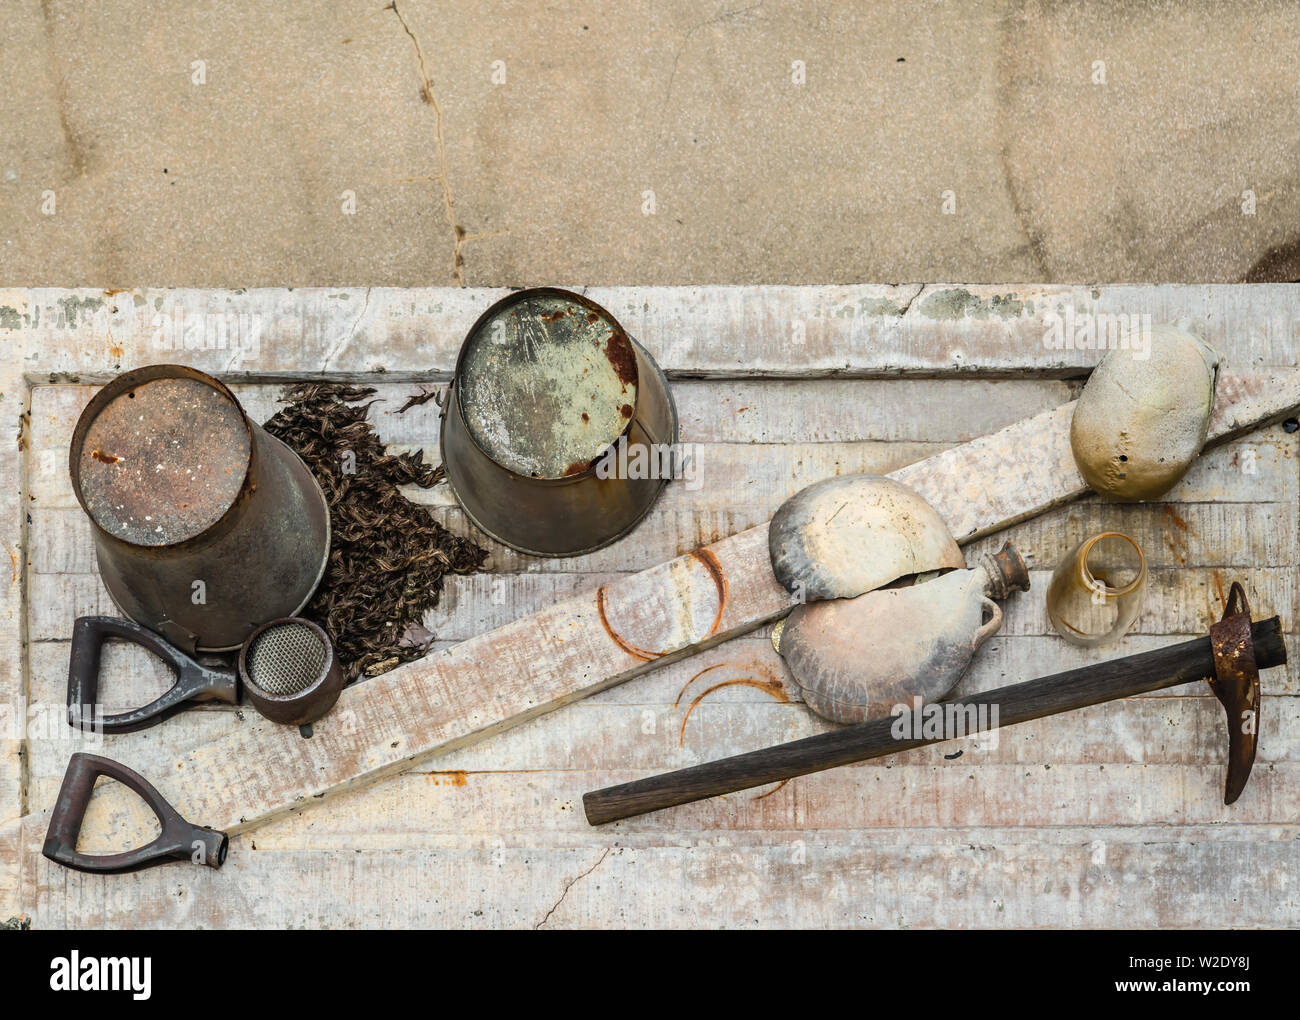 old rusty archeology tools display on board Stock Photo